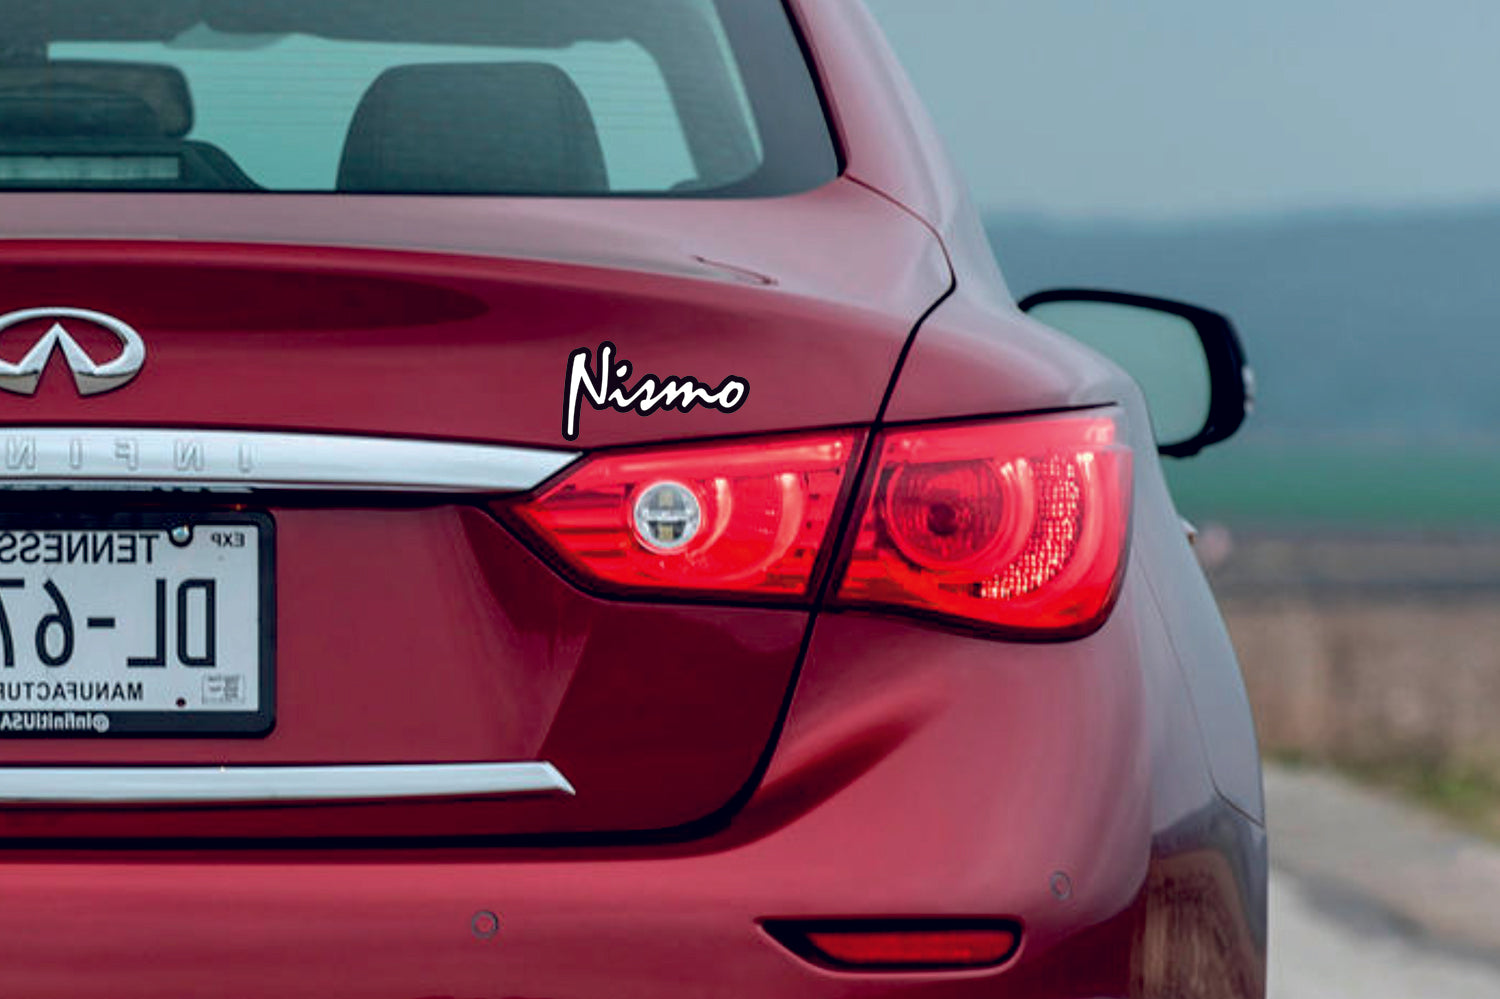 Infiniti tailgate trunk rear emblem with Nismo logo (Type 2)